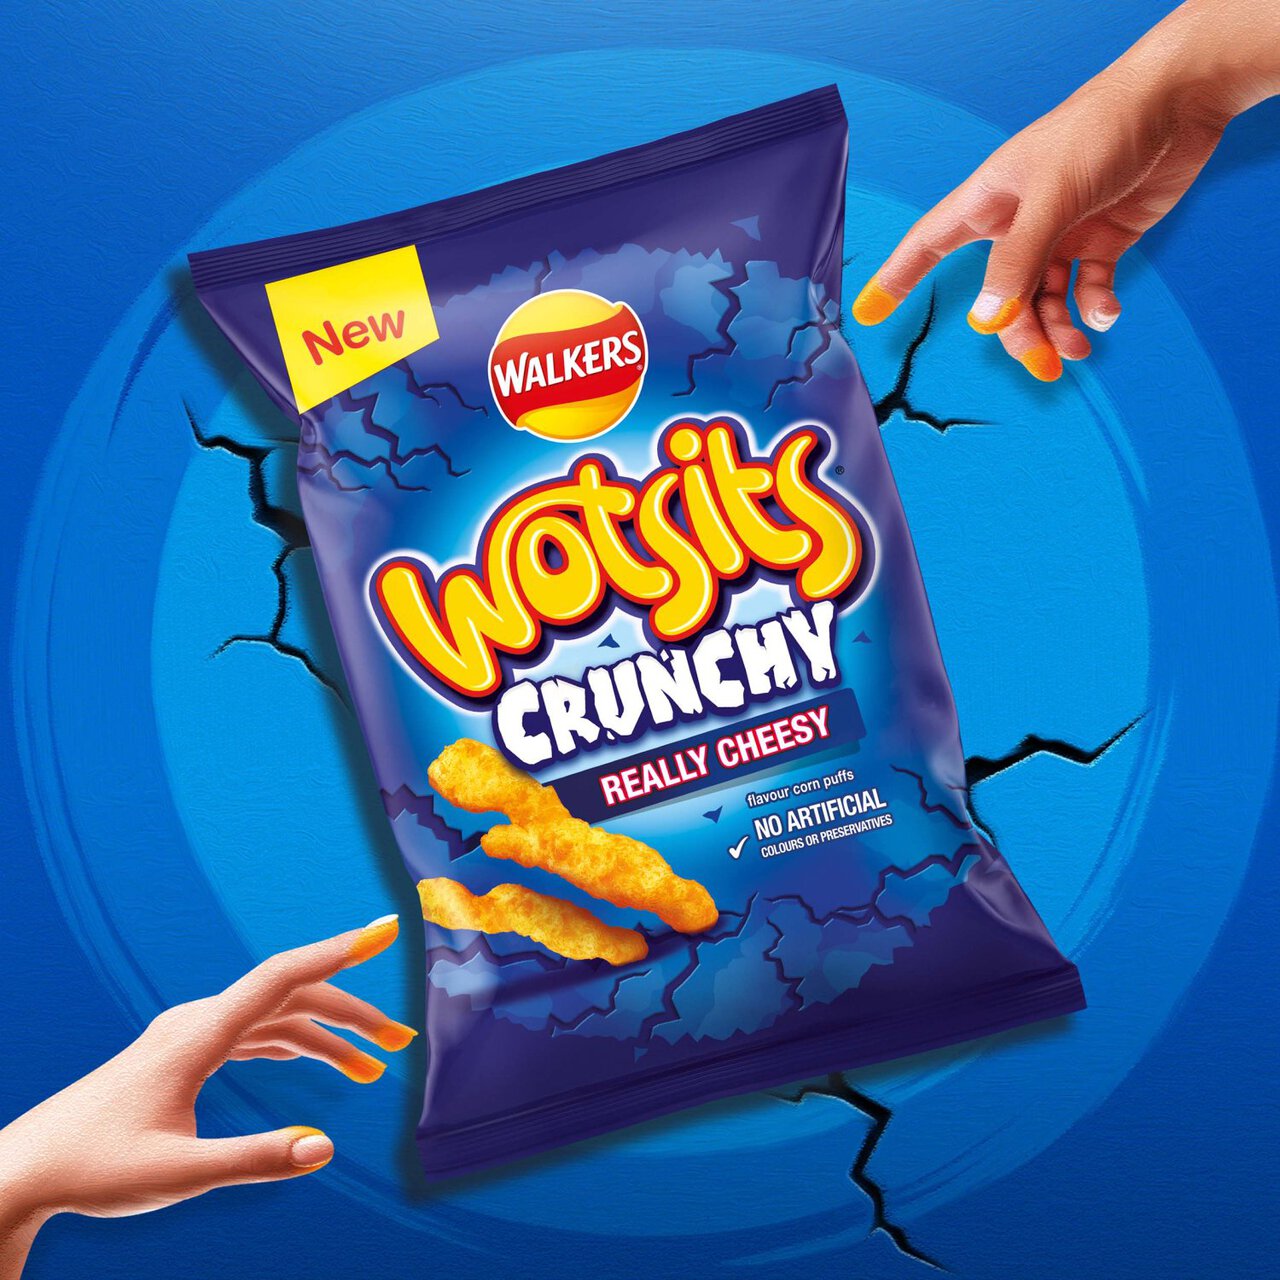 Walkers Wotsits Crunchy Really Cheesy Snacks 140g